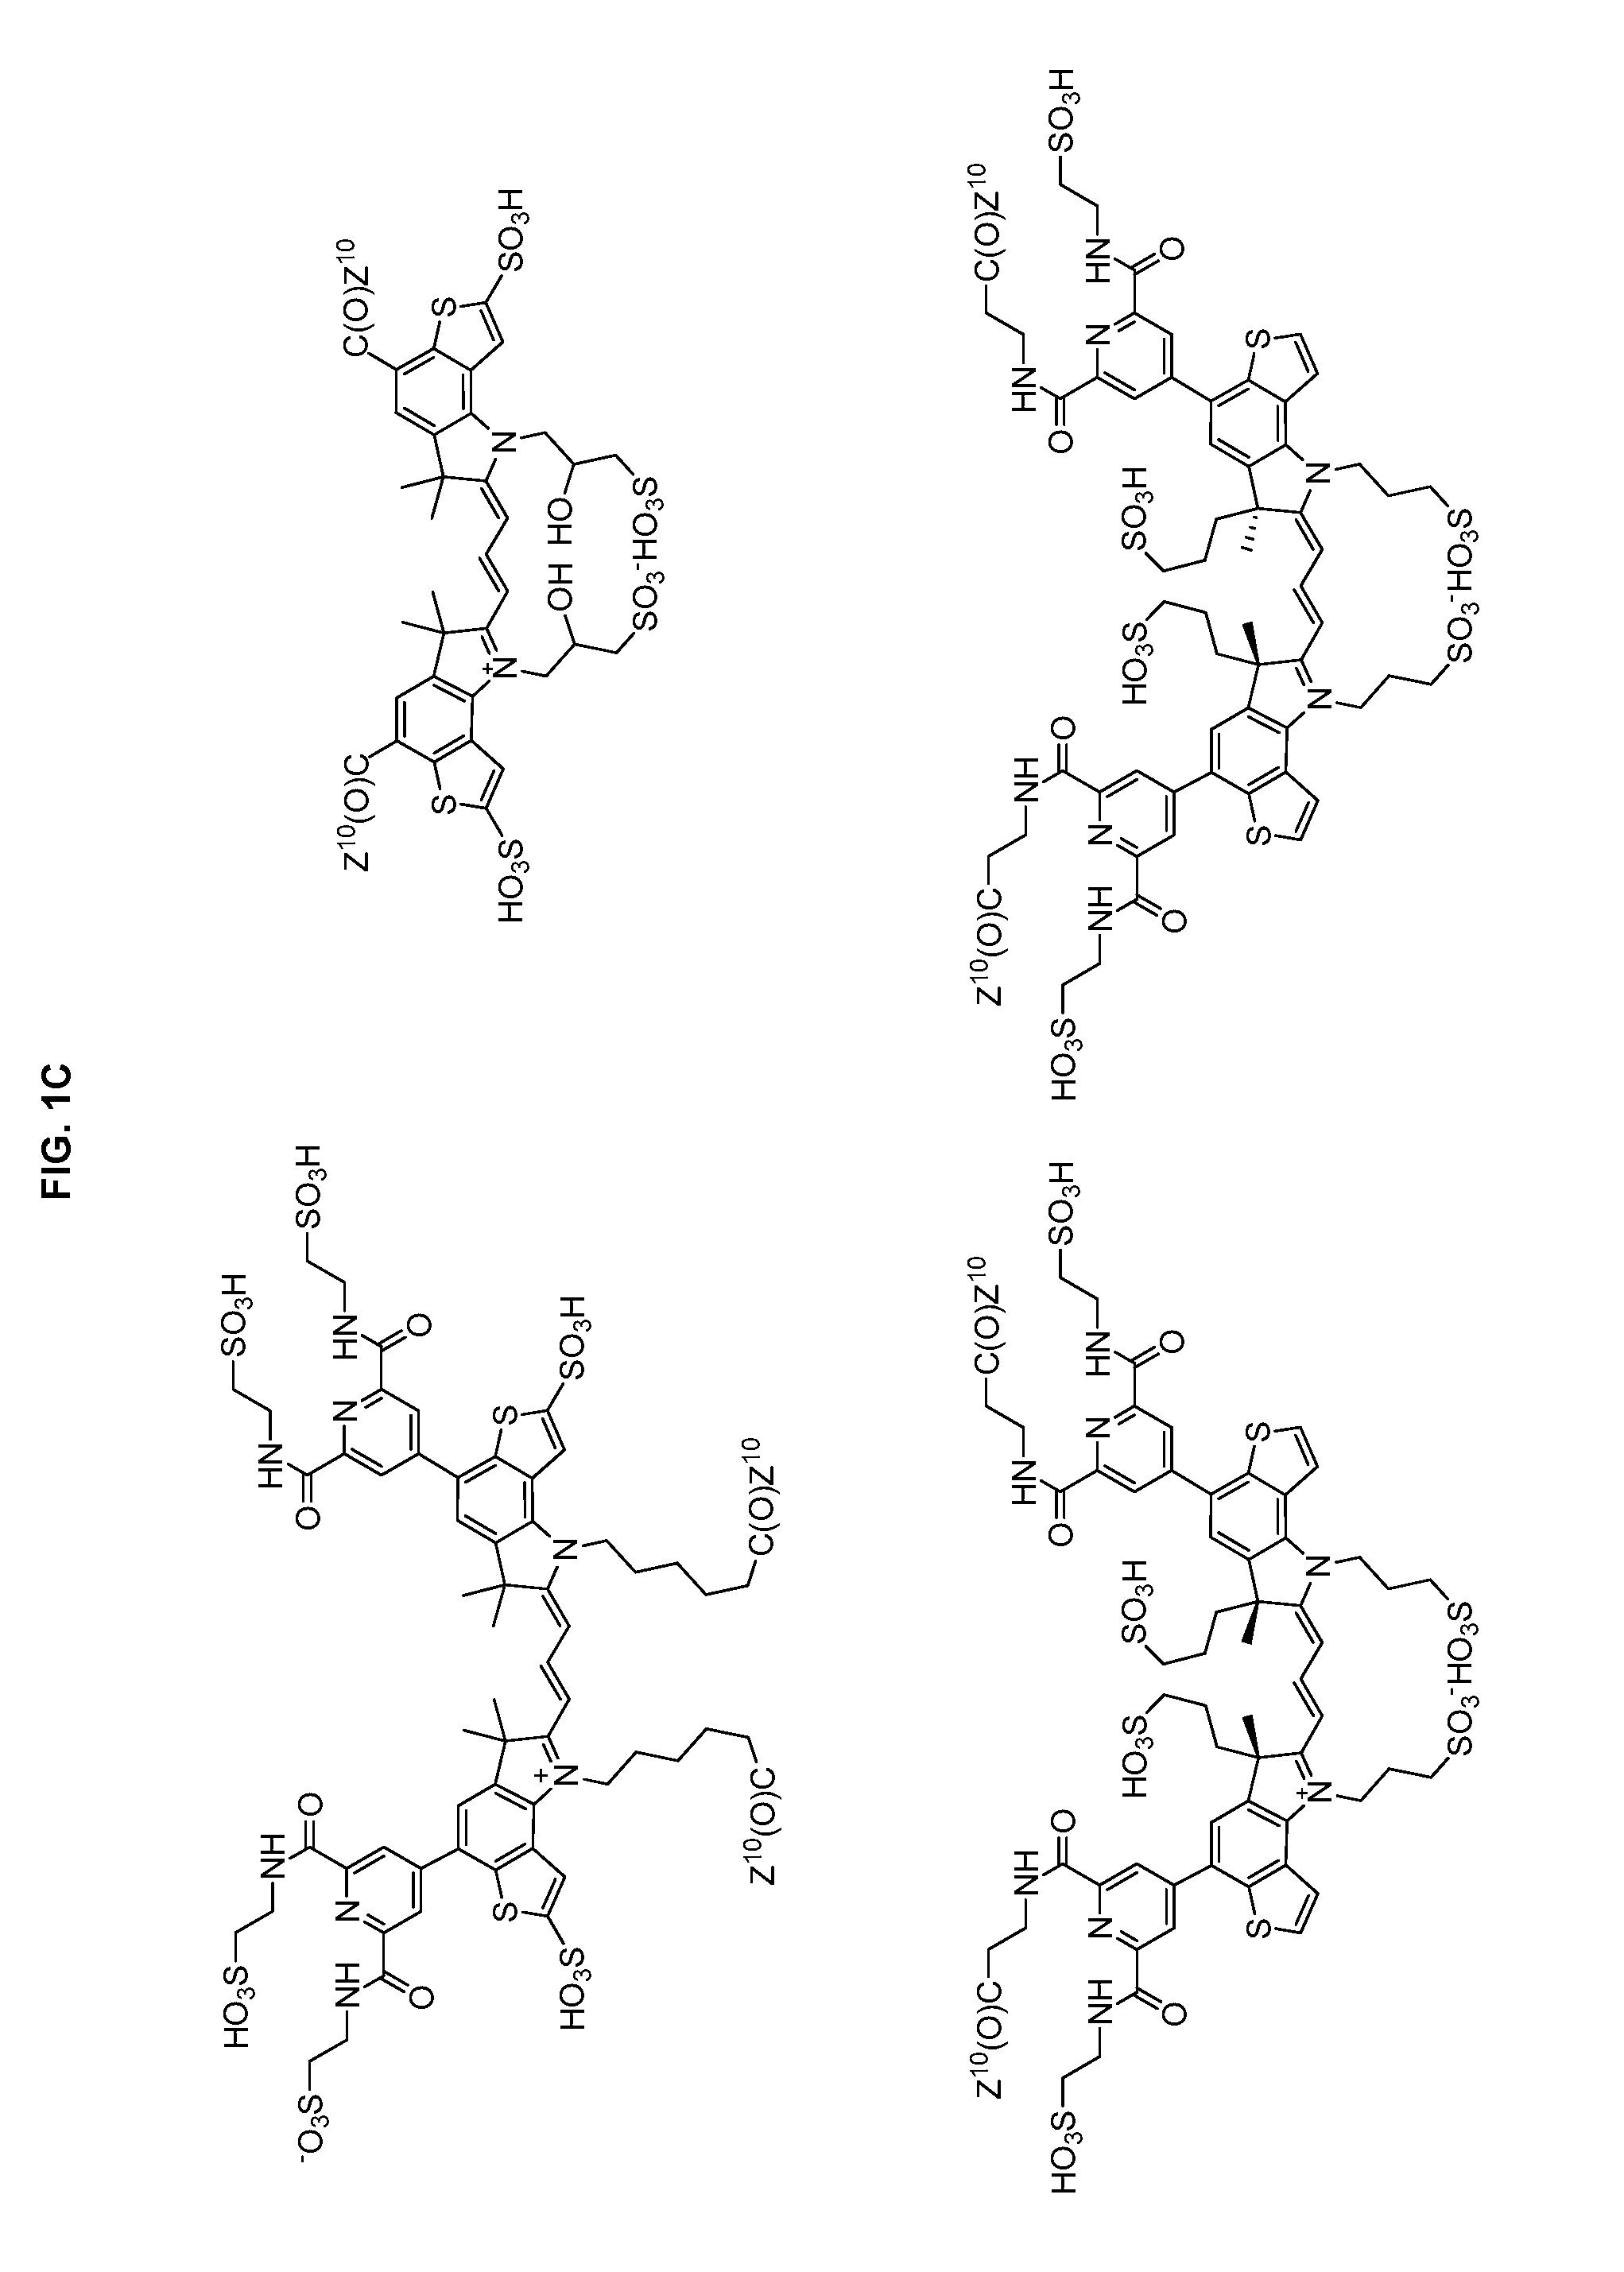 Heteroarylcyanine dyes with sulfonic acid substituents